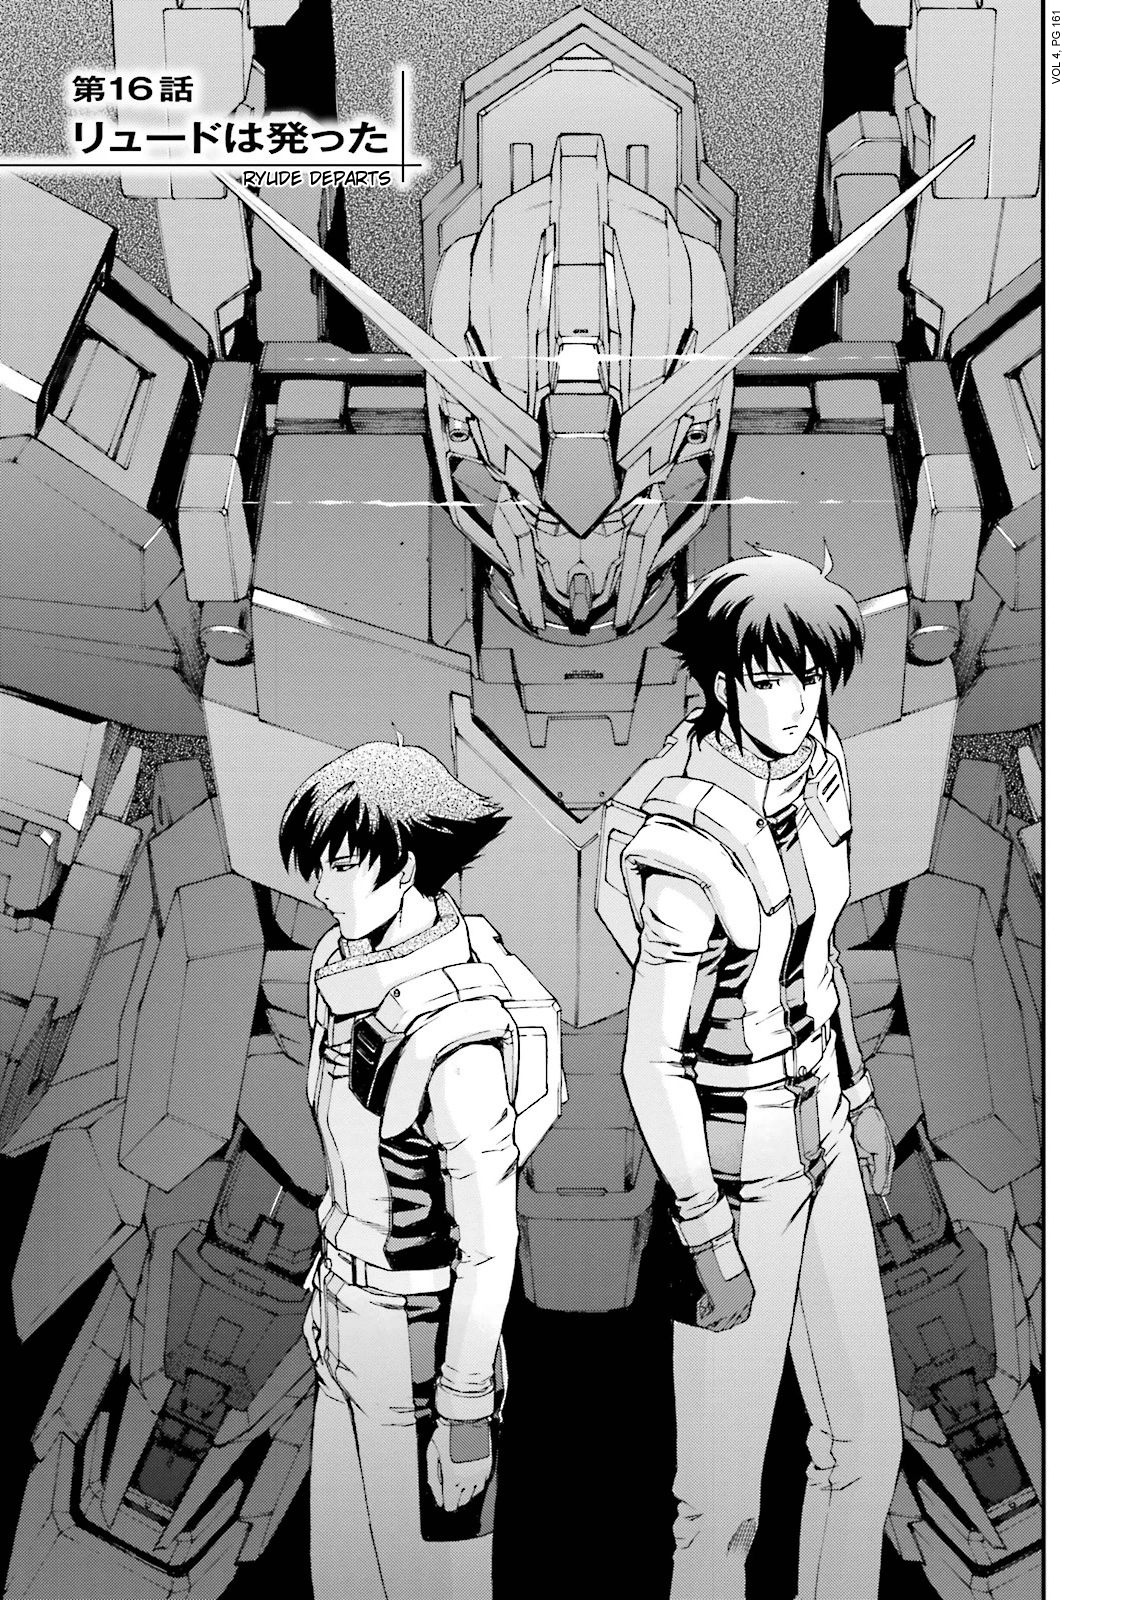 Kidou Senshi Gundam U.c. 0094 - Across The Sky Chapter 16 #1